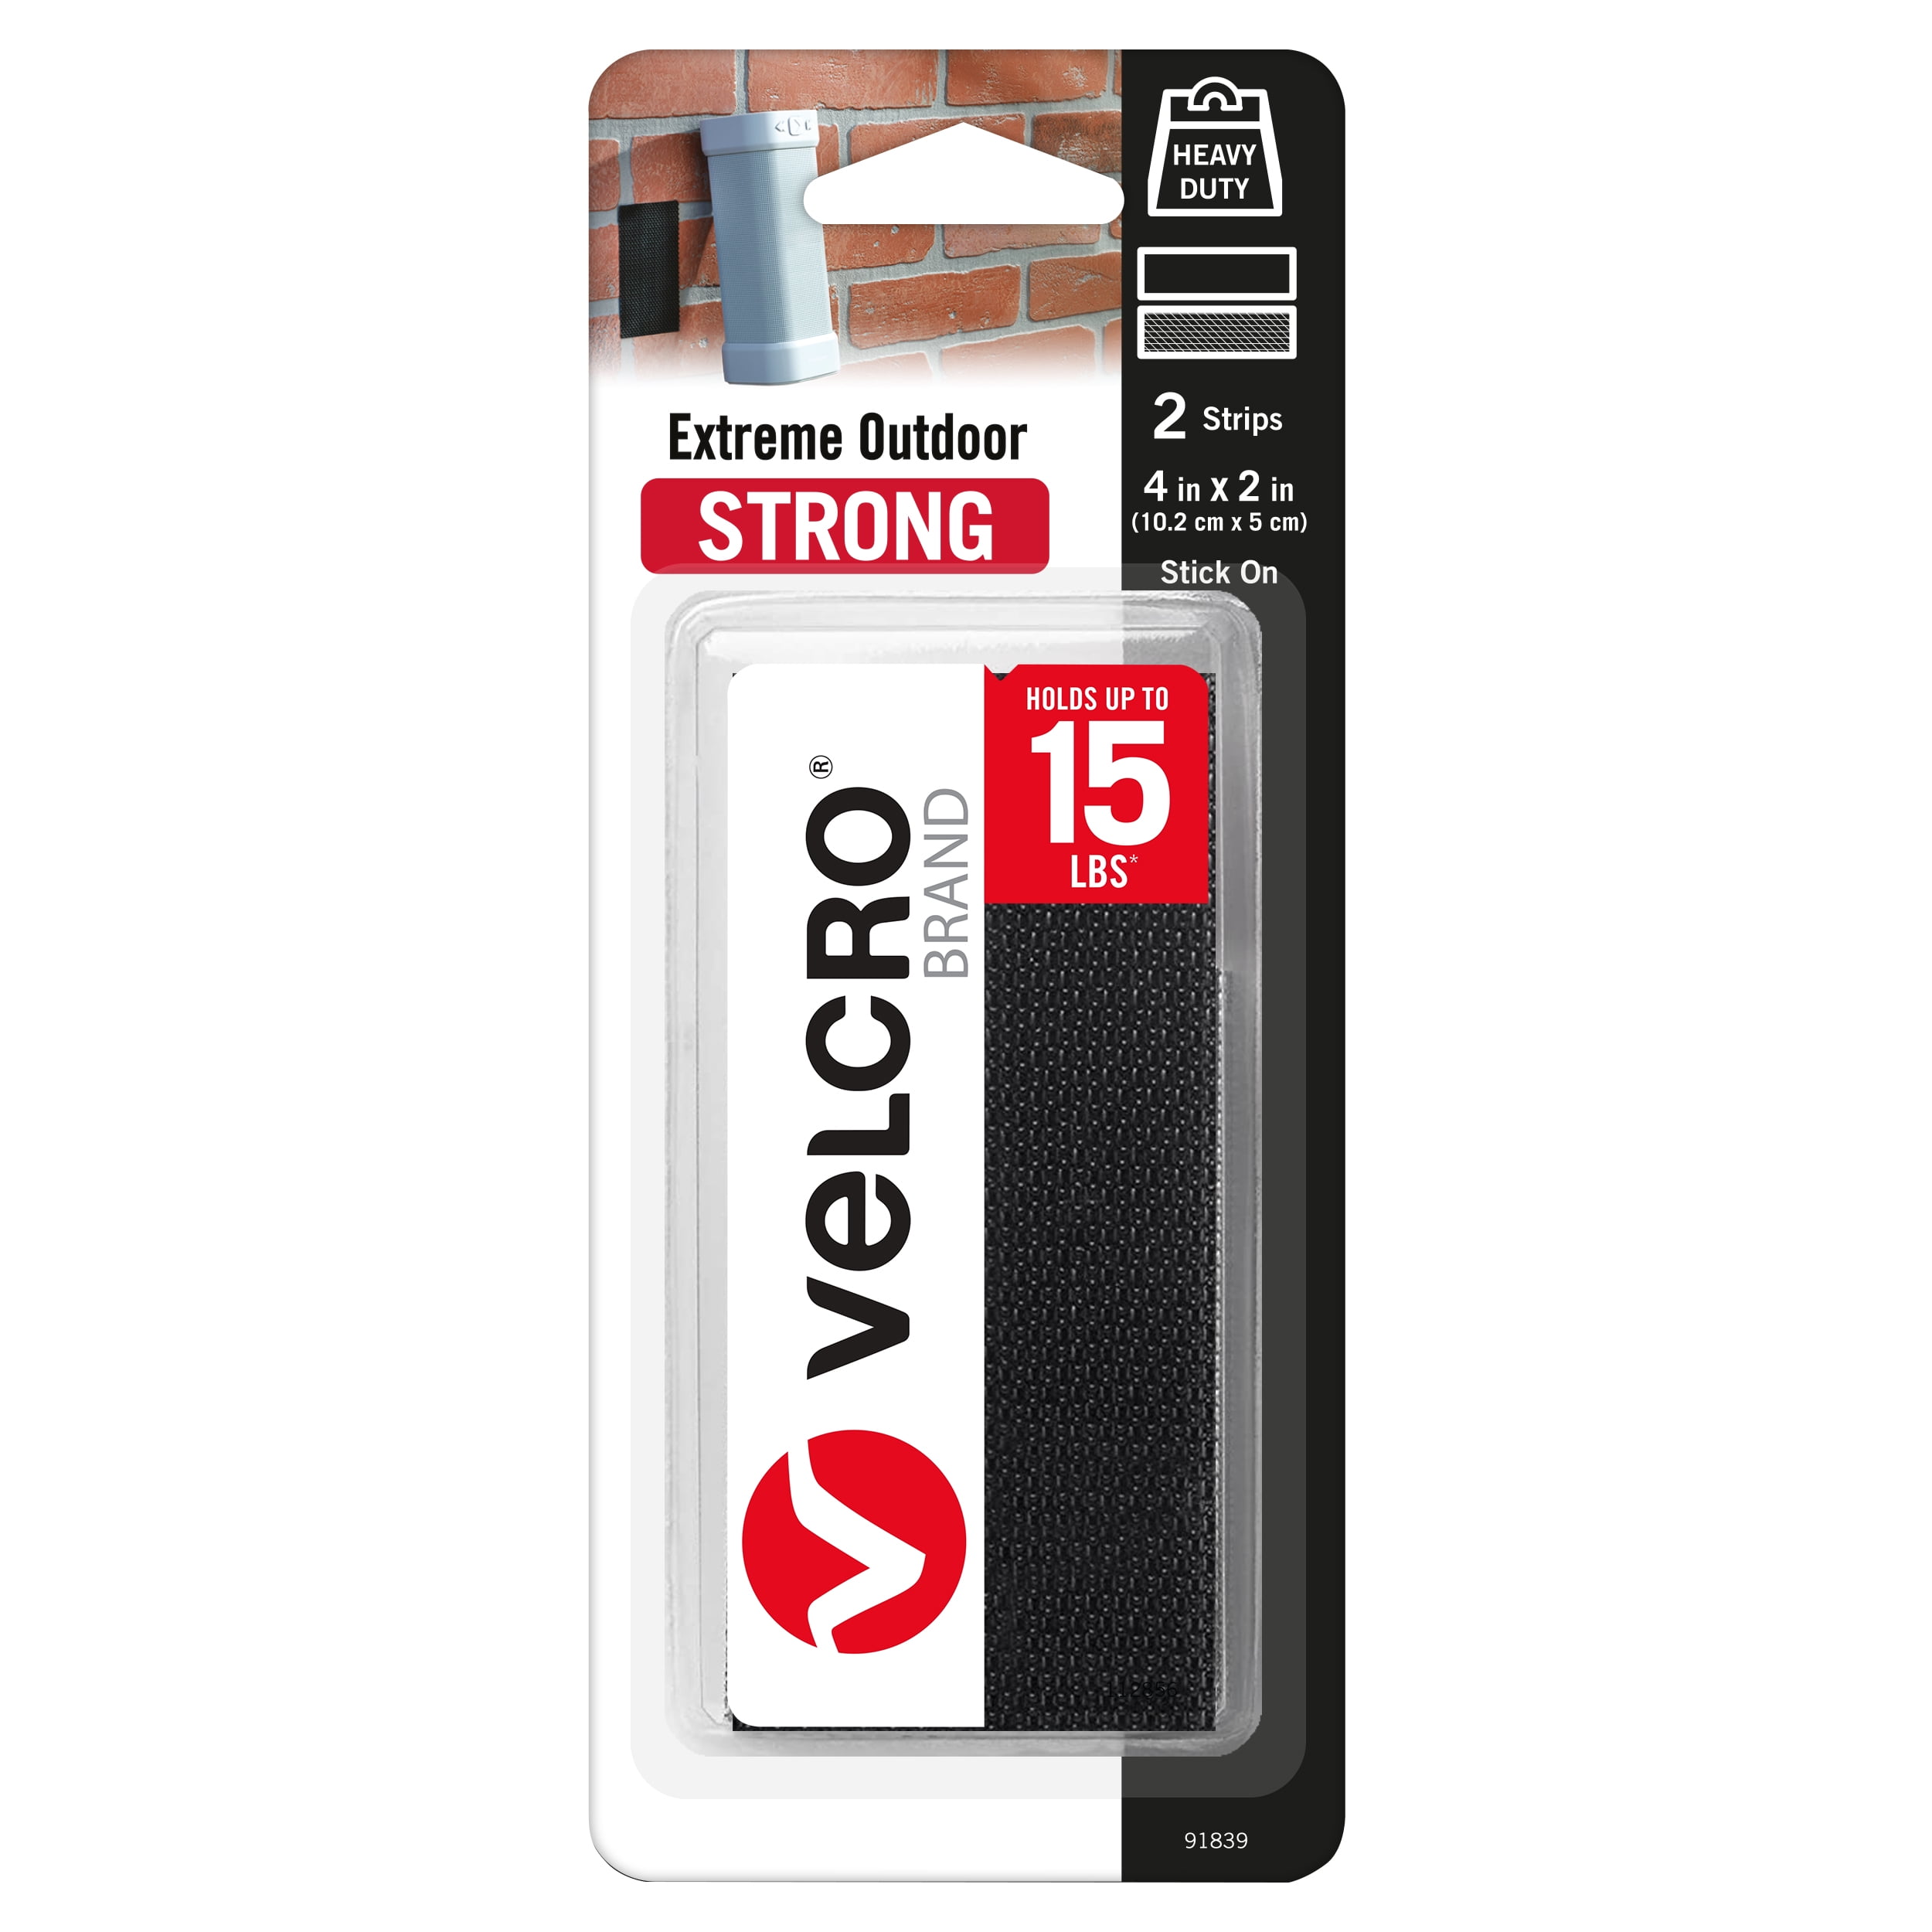 VELCRO® Brand Heavy Duty Stick On Strips 50mm x 100mm x 2 Sets